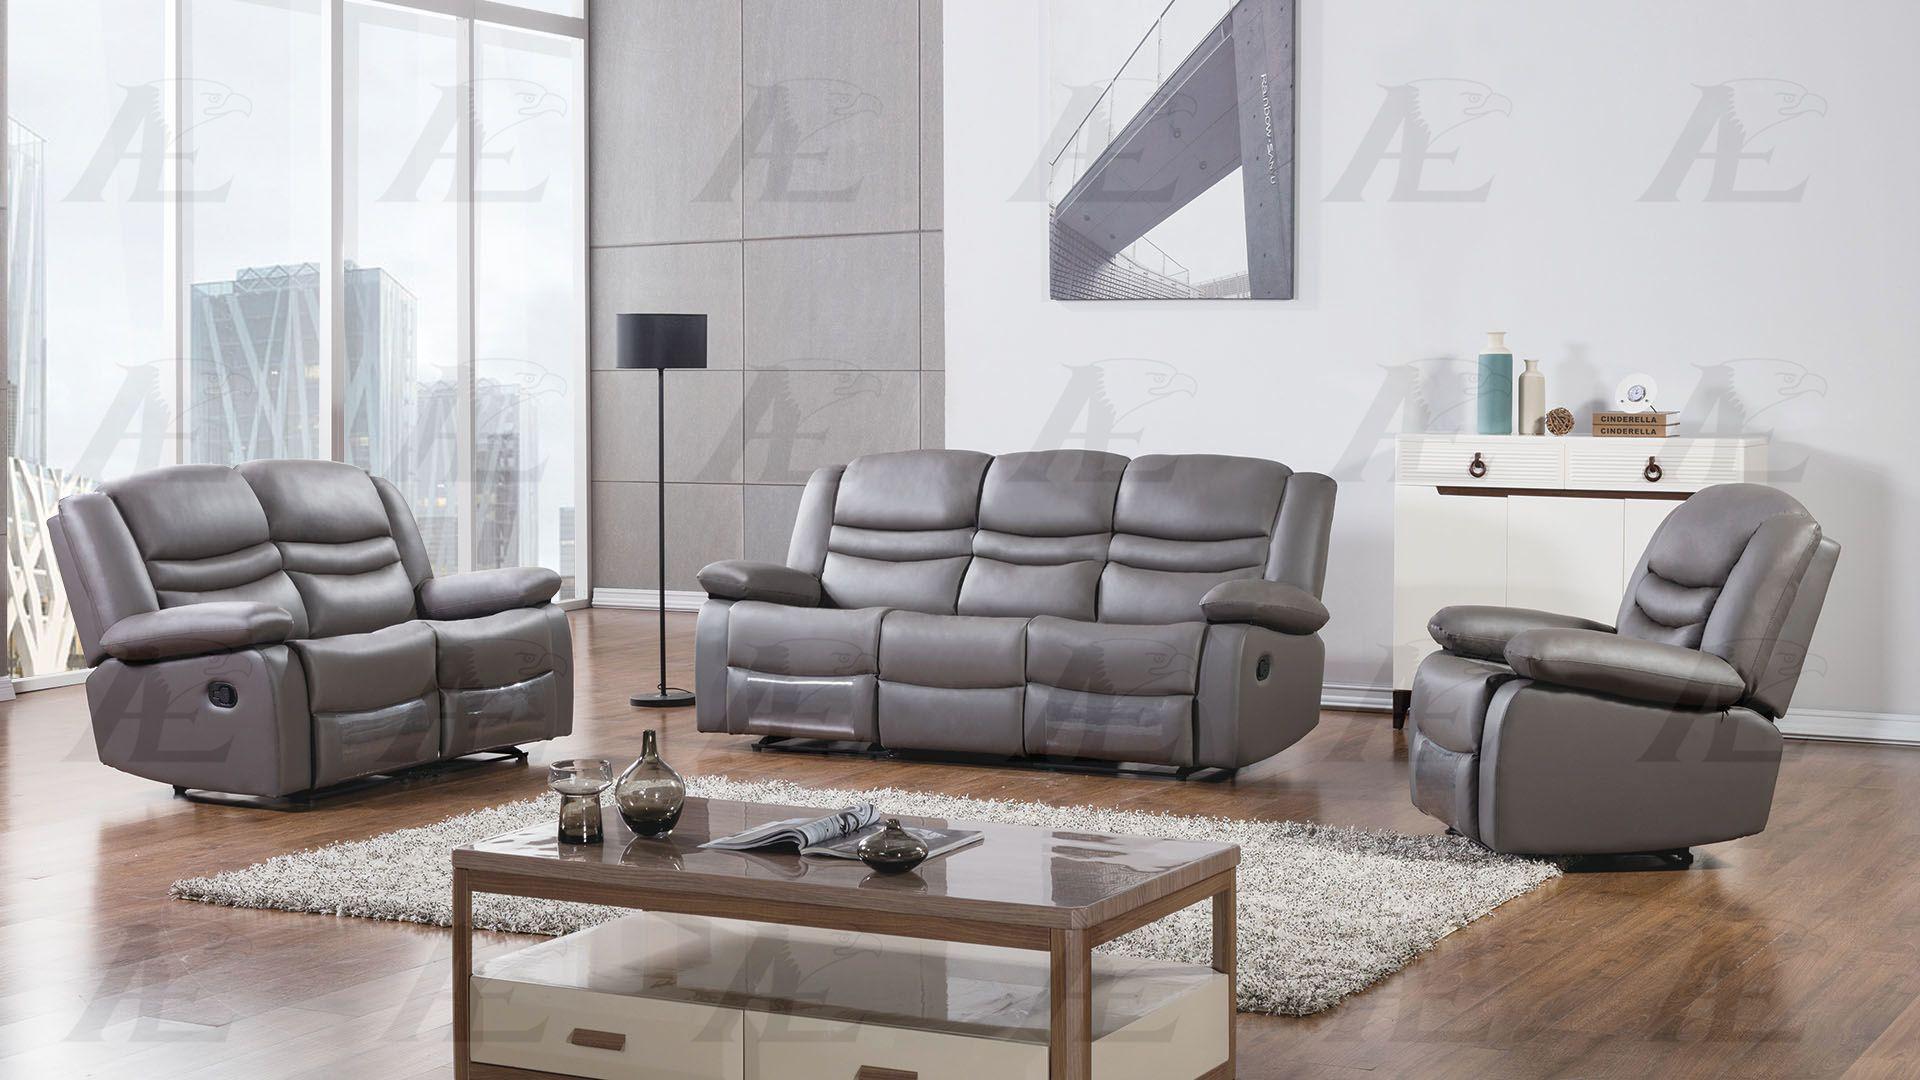 

    
American Eagle Furniture AE-D823-DG Loveseat Dark Gray AE-D823-DG-Loveseat
